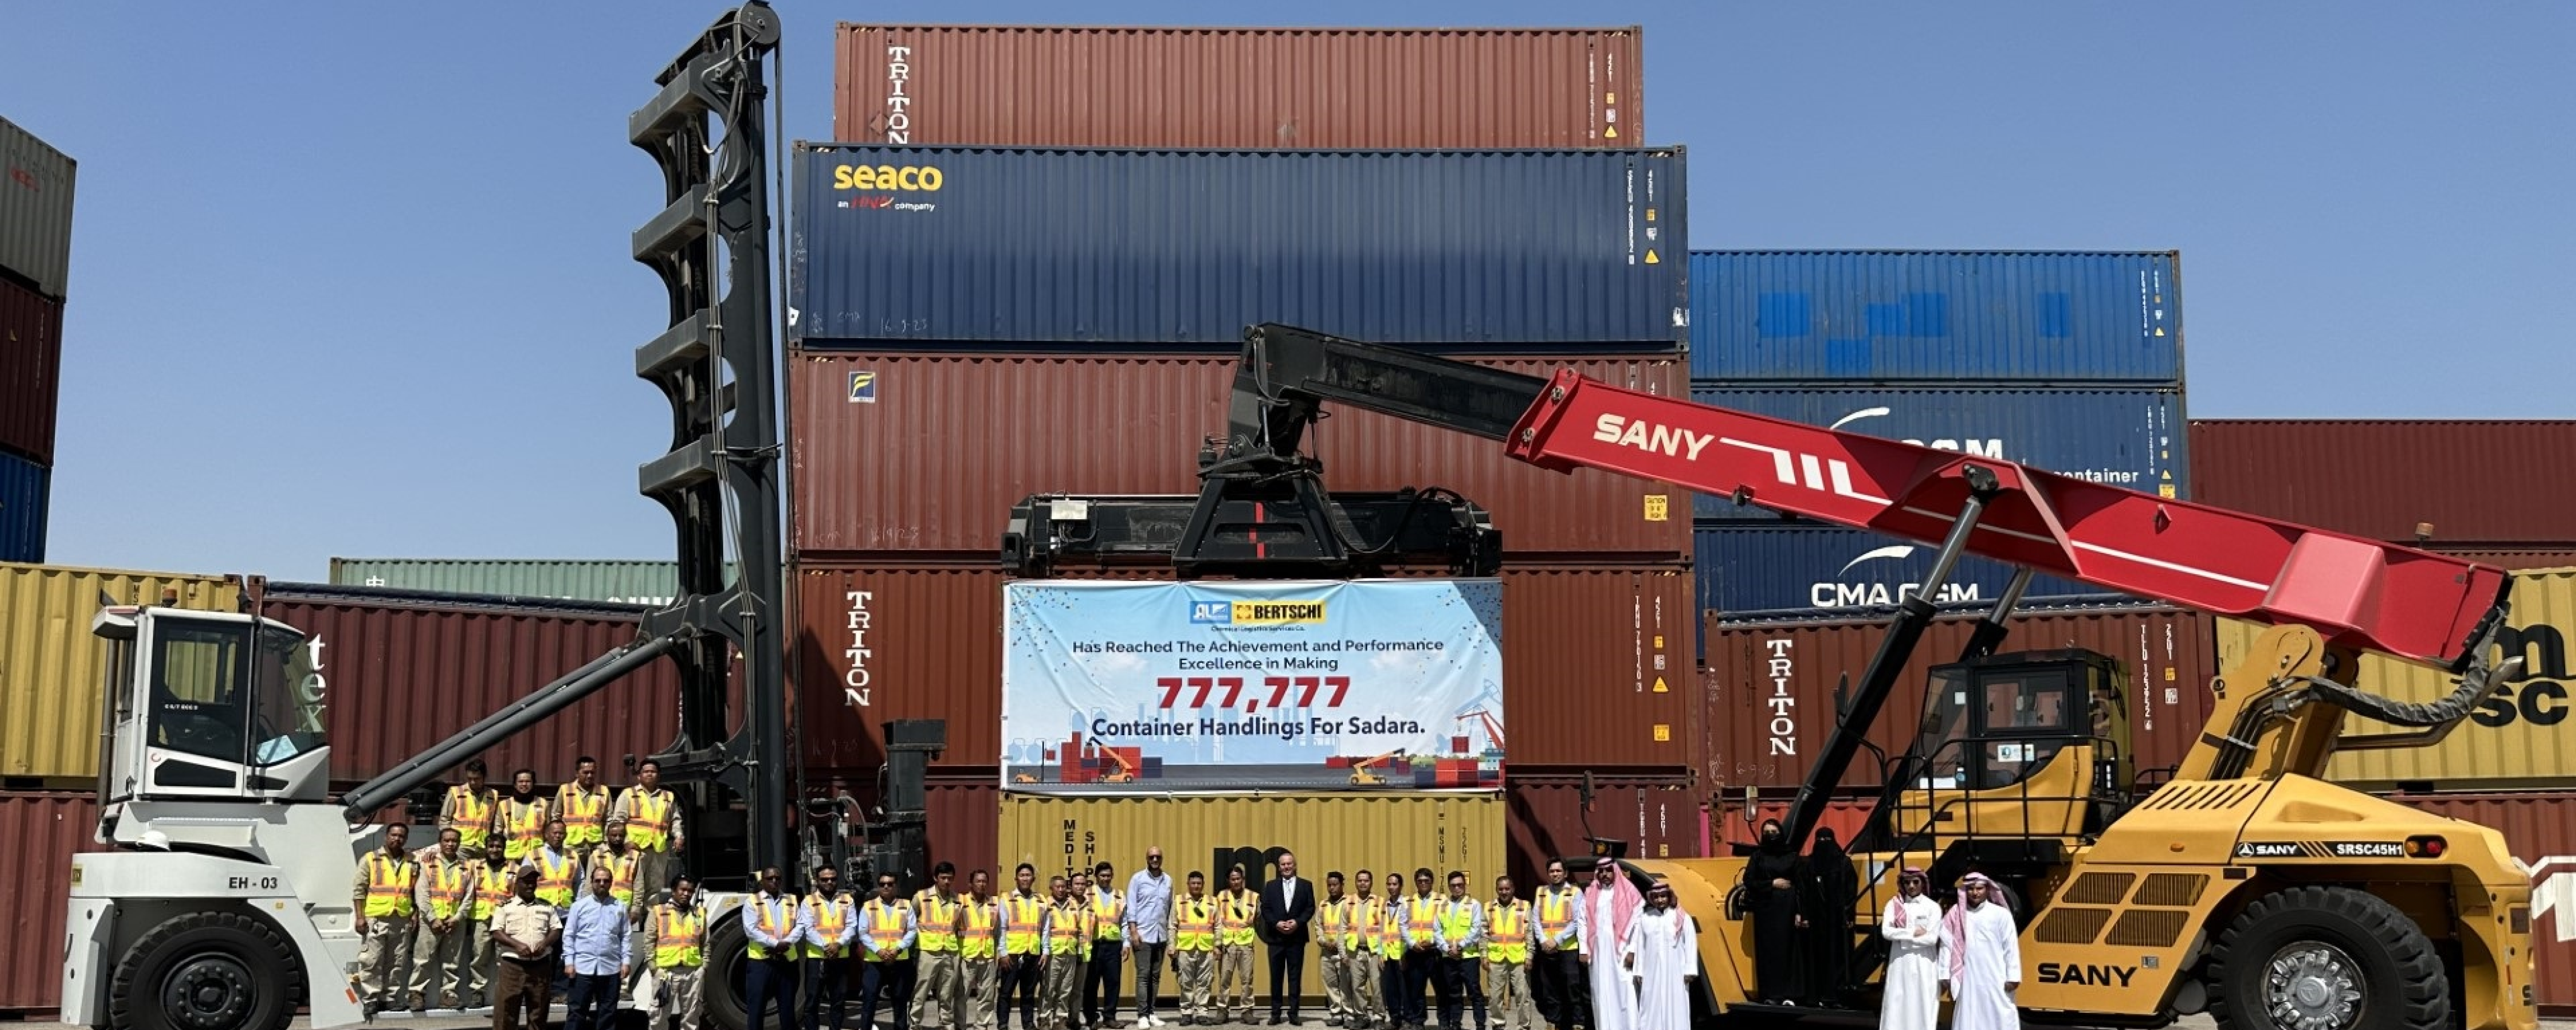 Celebrating 777,777 Safe Container Handlings